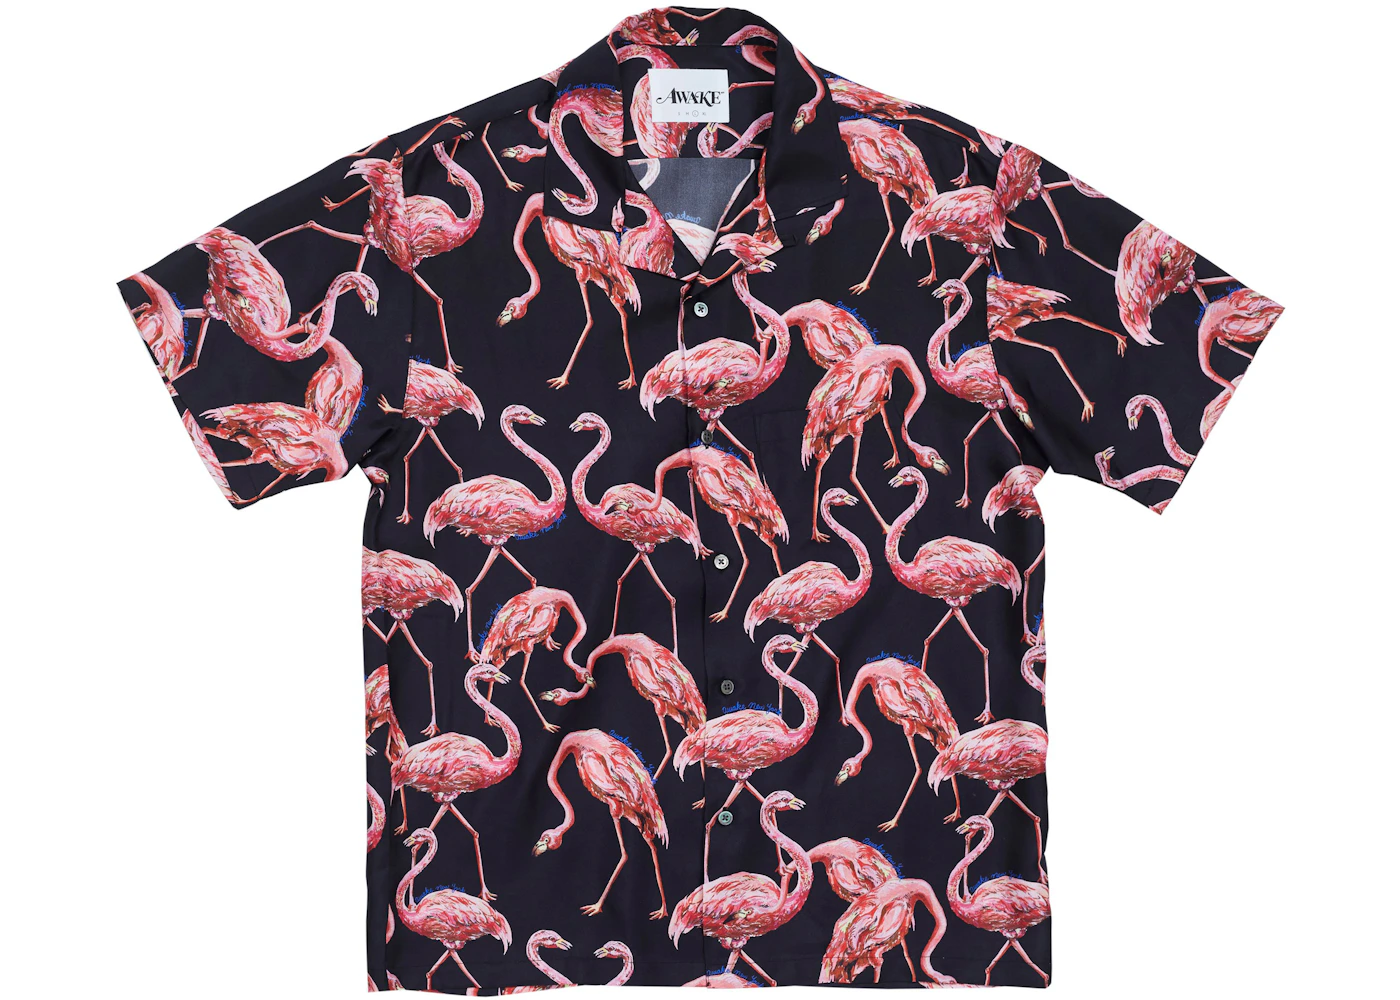 Awake Silk Flamingo Print Camp Shirt Black Men's - SS19 - US